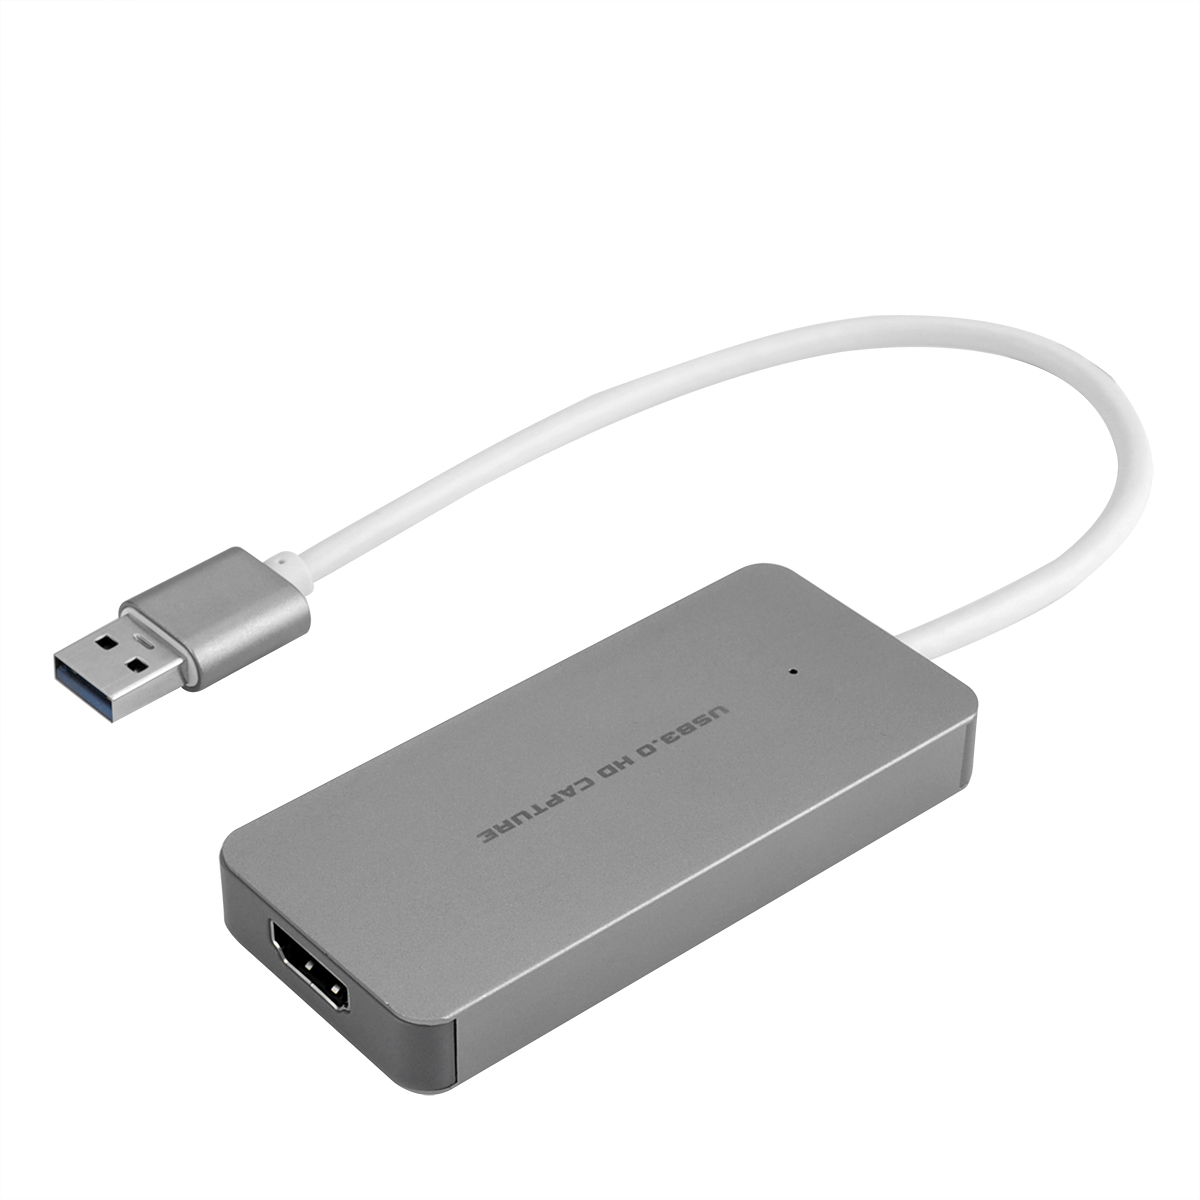 SaiEL USB Type-C スマホ対応 超小型ビデオキャプチャーボックス ezcap265C HDMI 4K入力対応 USB3.0 1080P 60fpsキャプチャ PS4/Xbox One/Nintendo Switch対応 OBSでゲーム等のライブ生配信・録画 Web会議/テレビ会議 日本語取扱説明書同梱